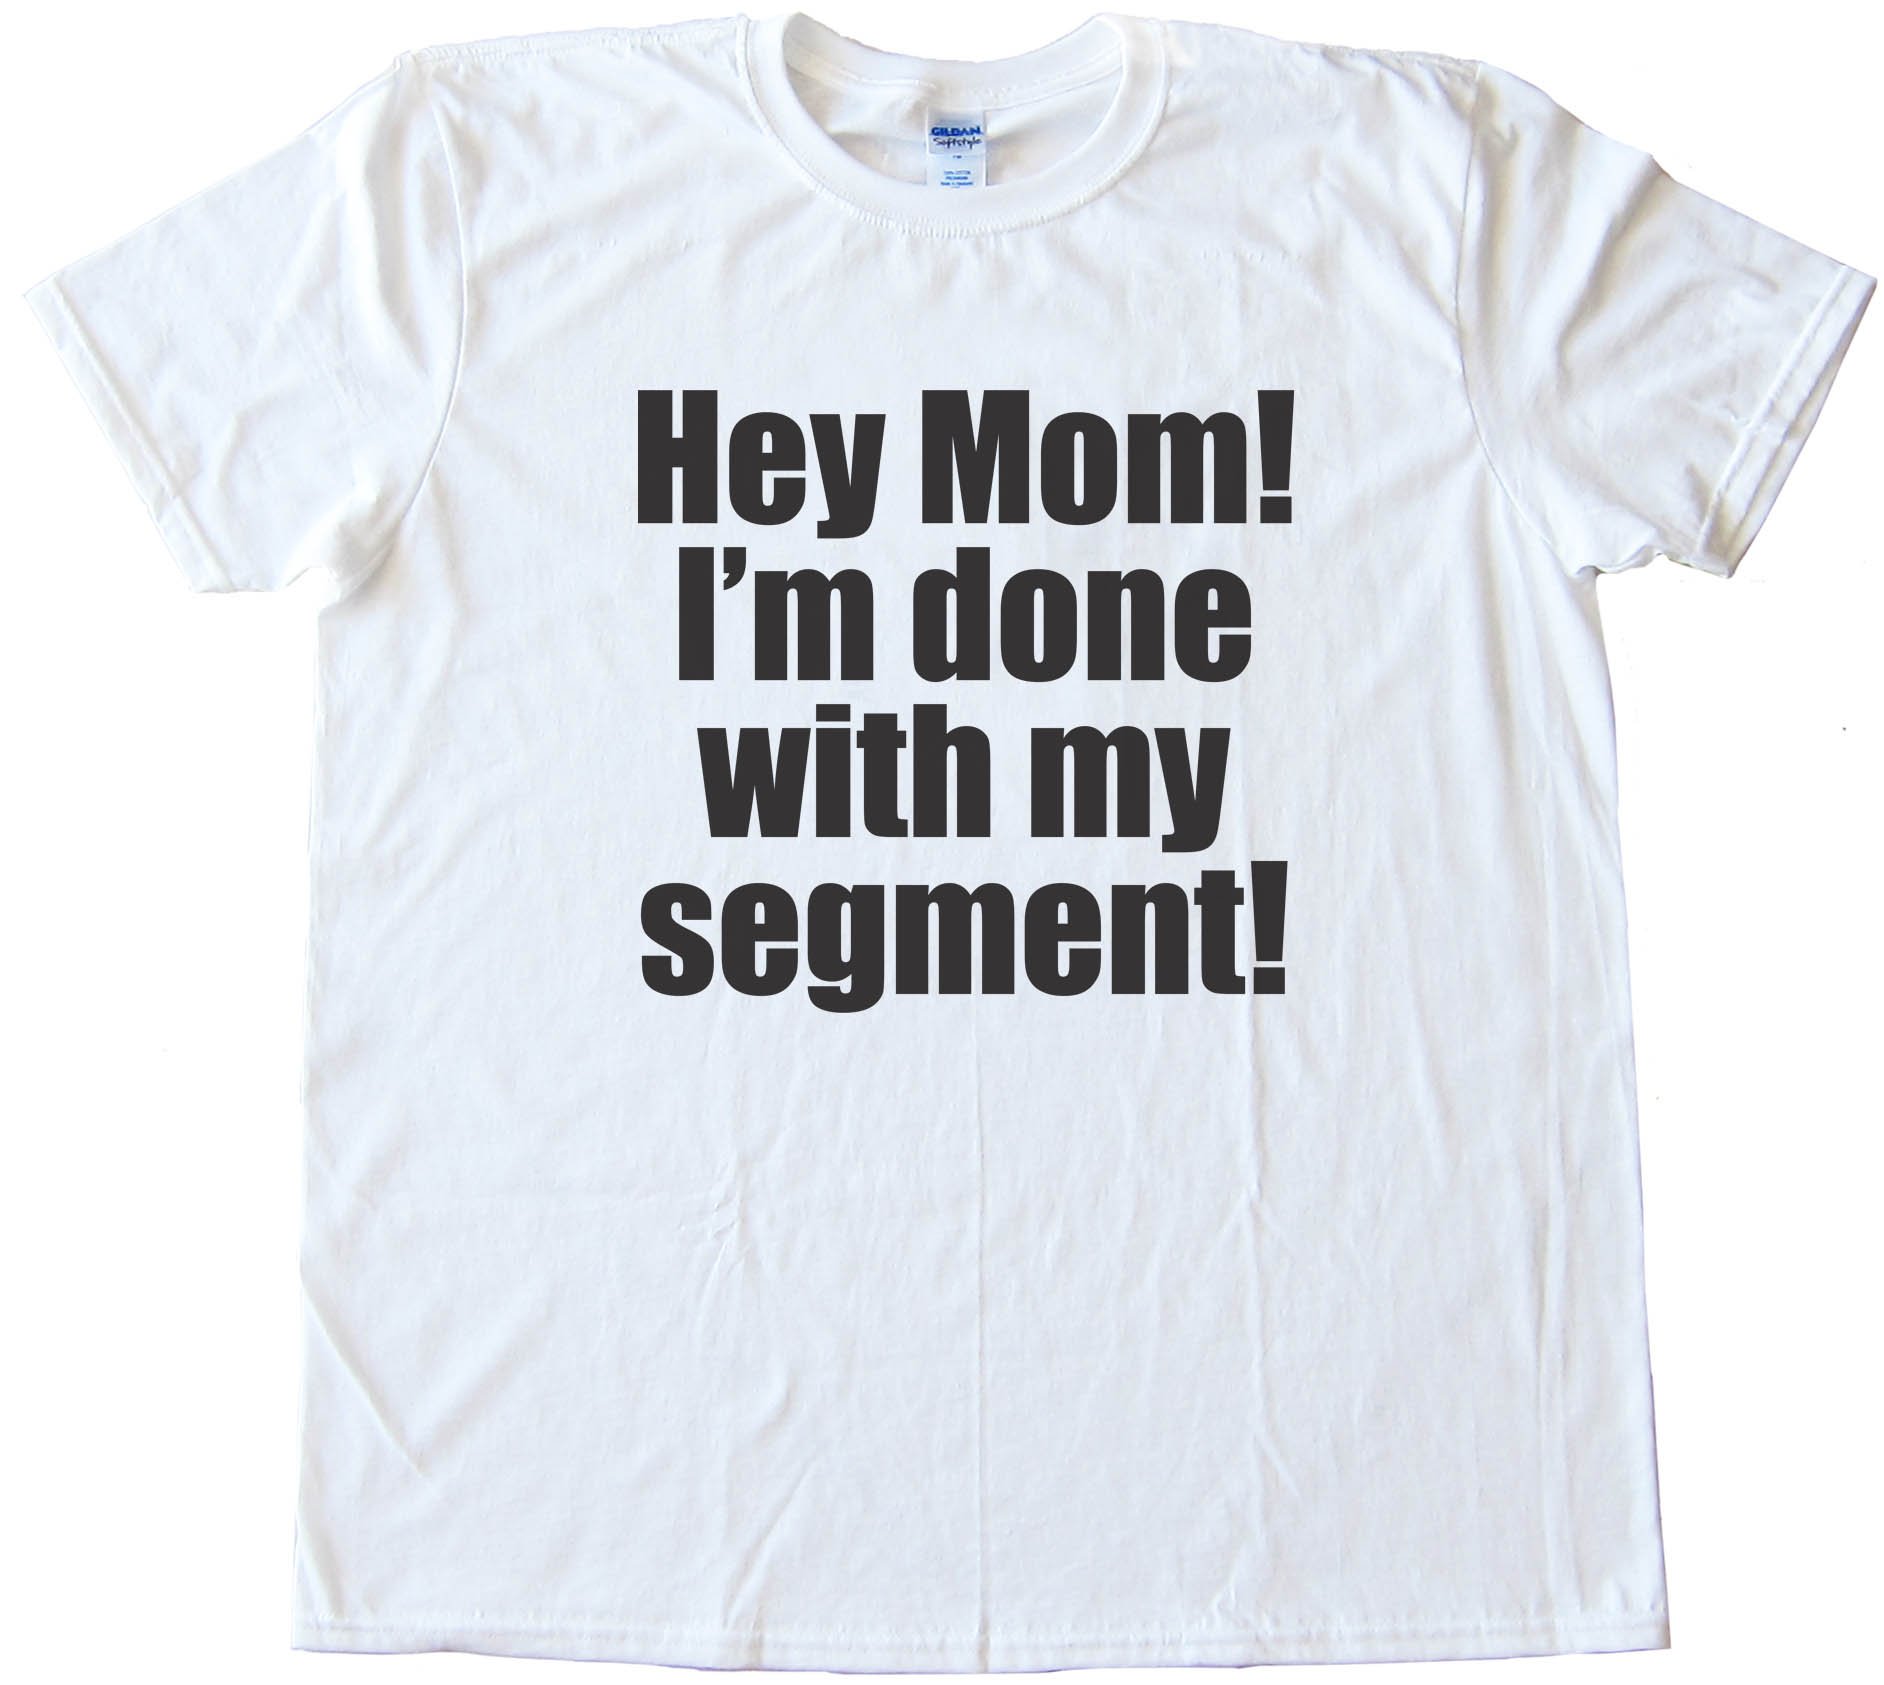 Hey Mom! I'M Done With My Segment! Espn - Tee Shirt